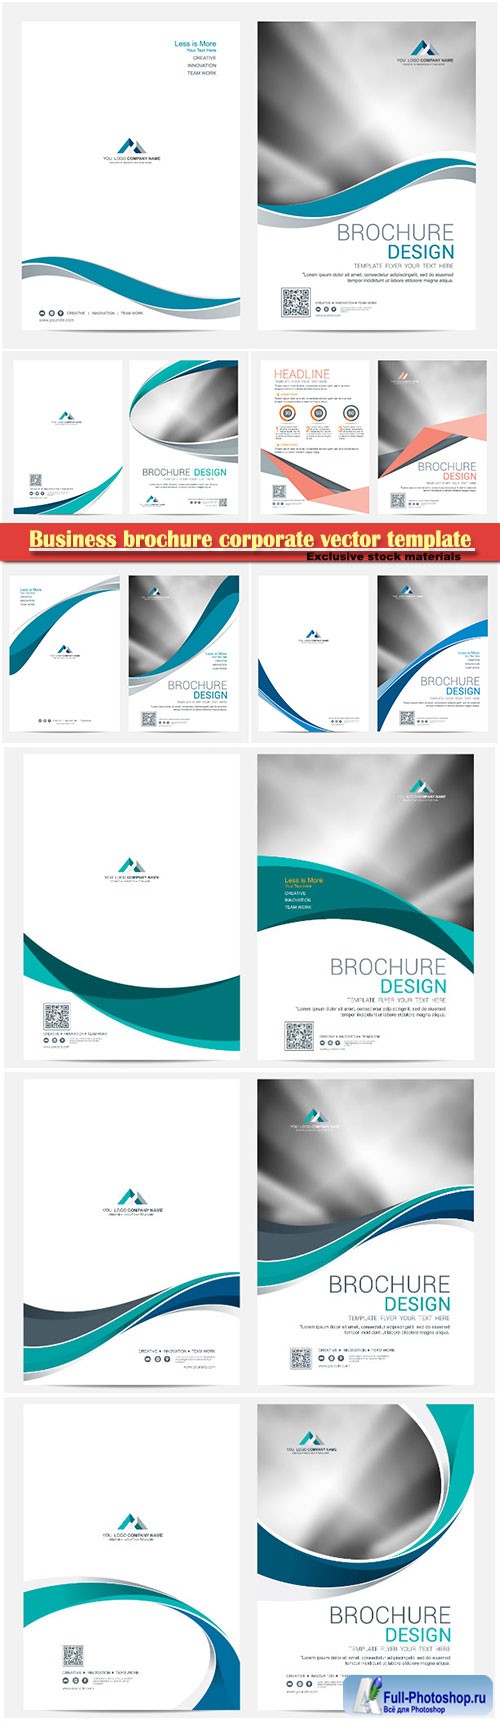 Business brochure corporate vector template, magazine flyer mockup # 24